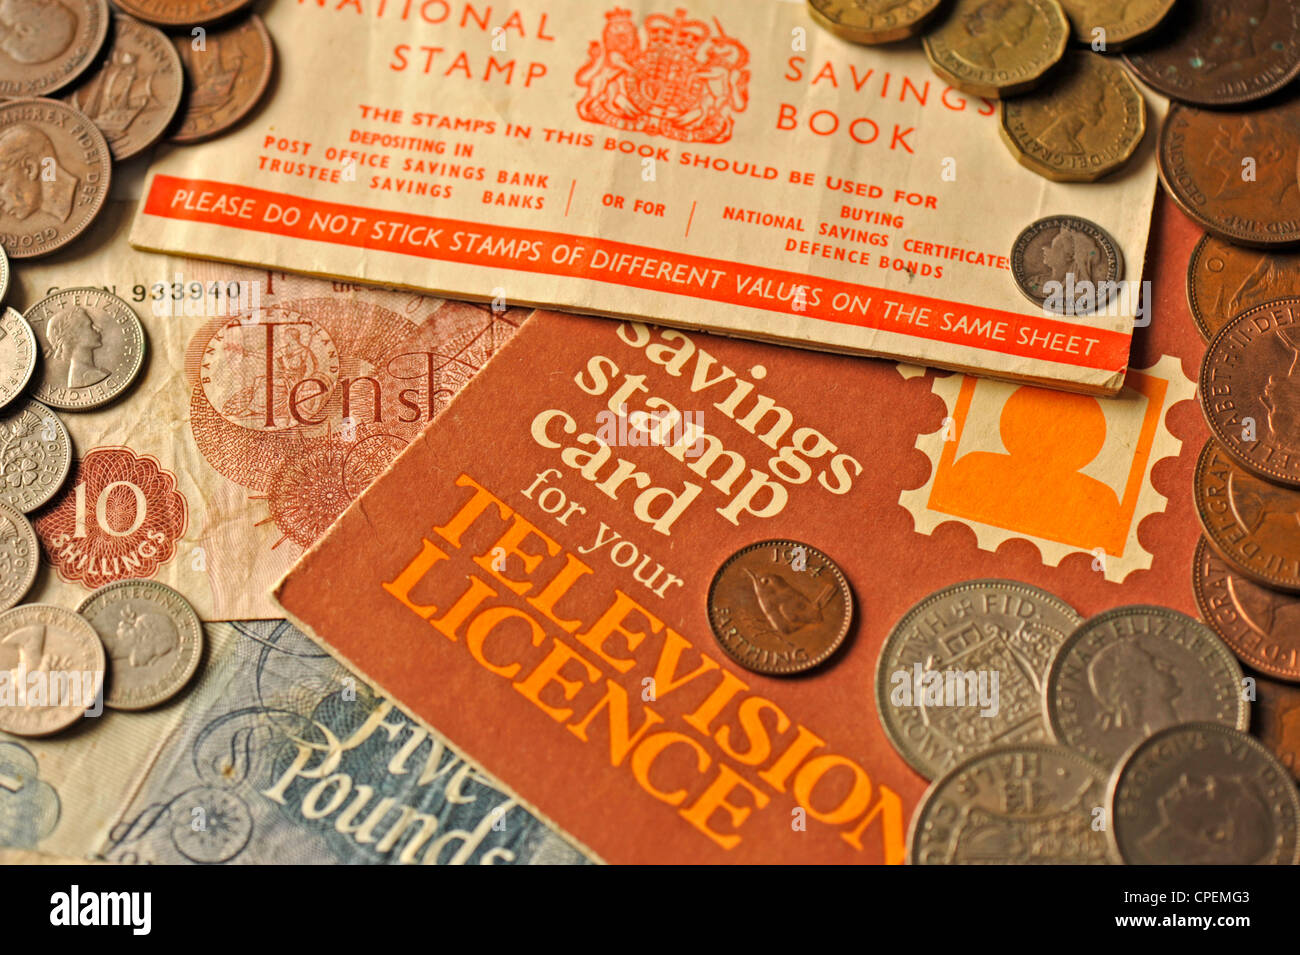 Old English money and savings stamp books Stock Photo